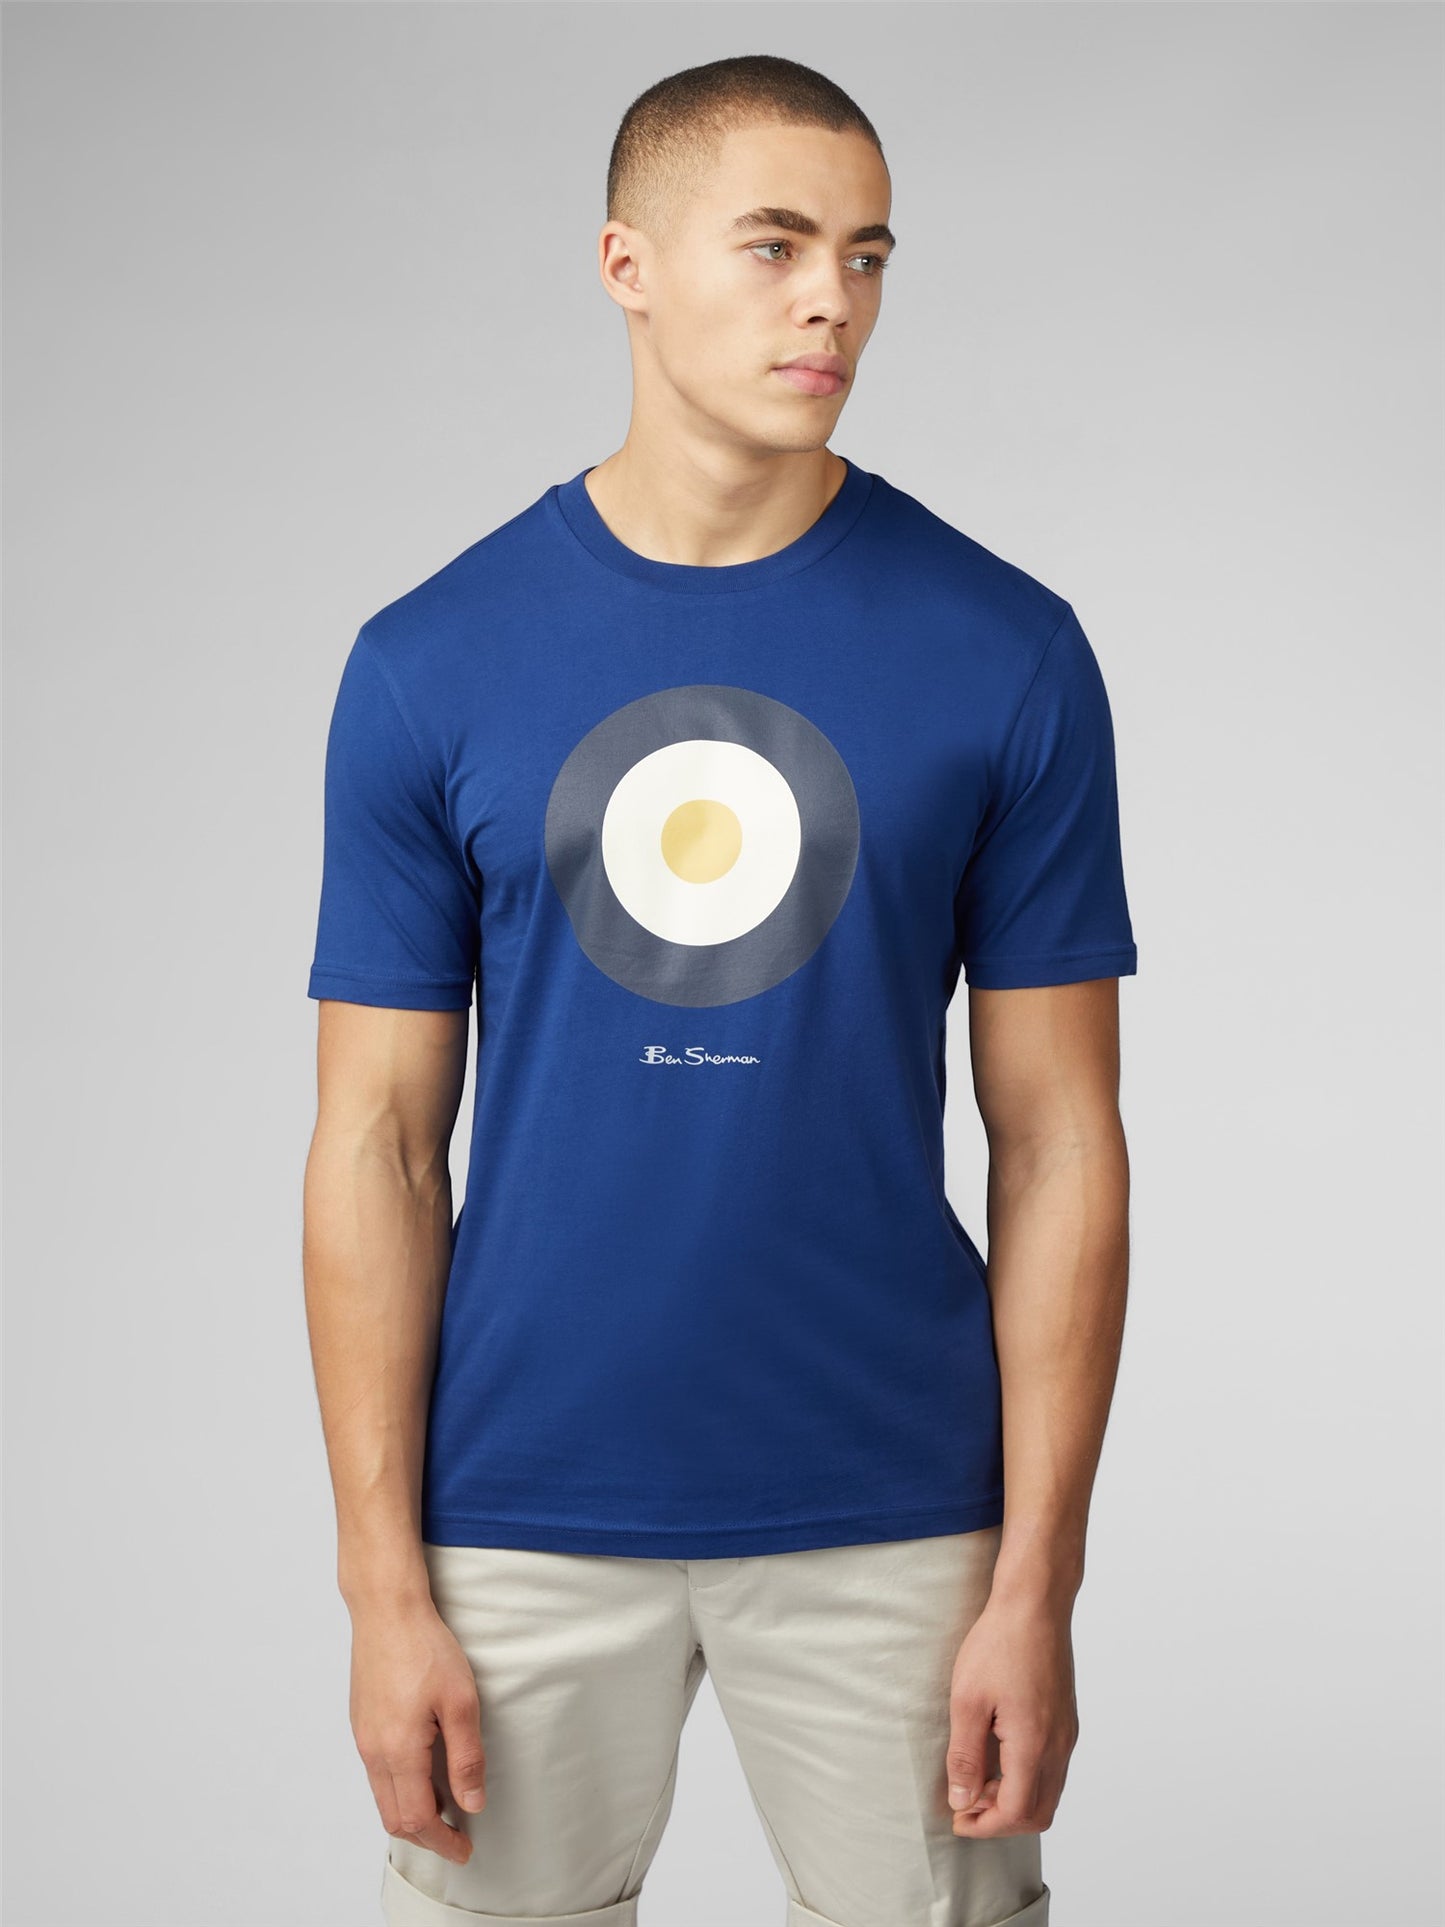 Ben Sherman Men's 0065093 SS Signature Target T-Shirt Twilight Denim